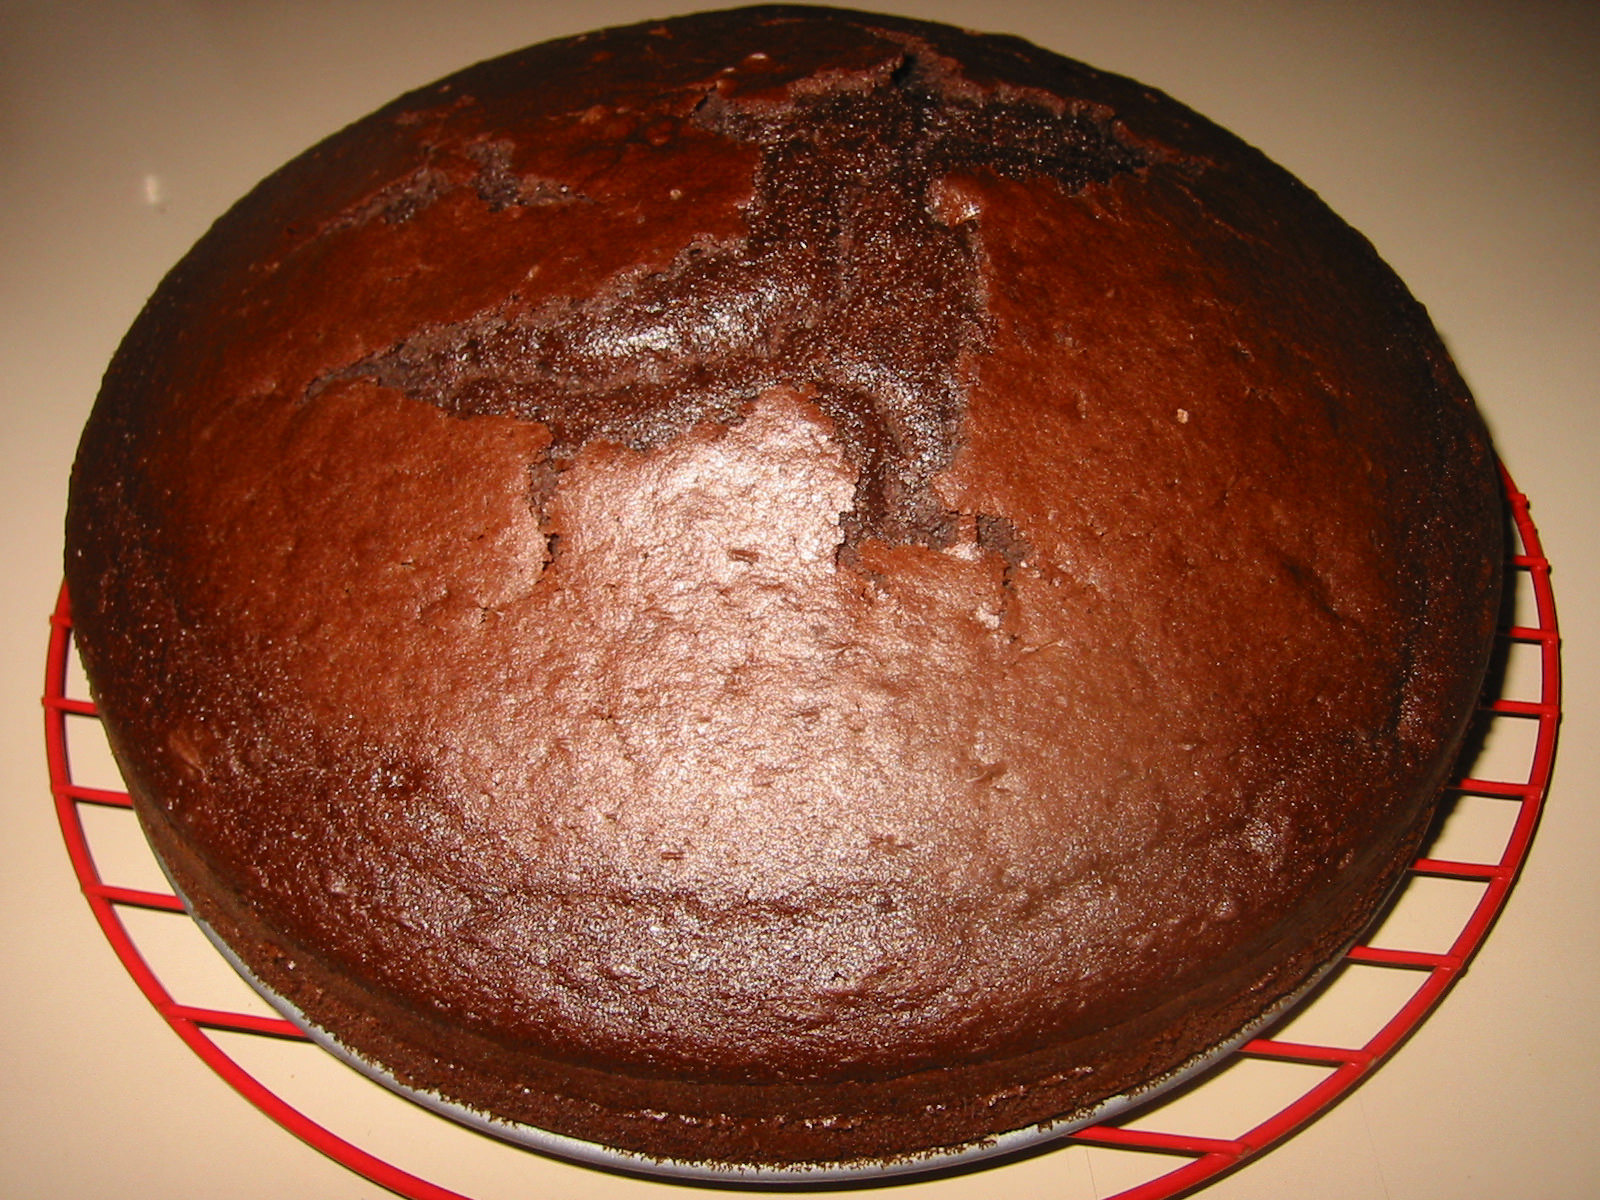 Chocolate cake, pre-icing